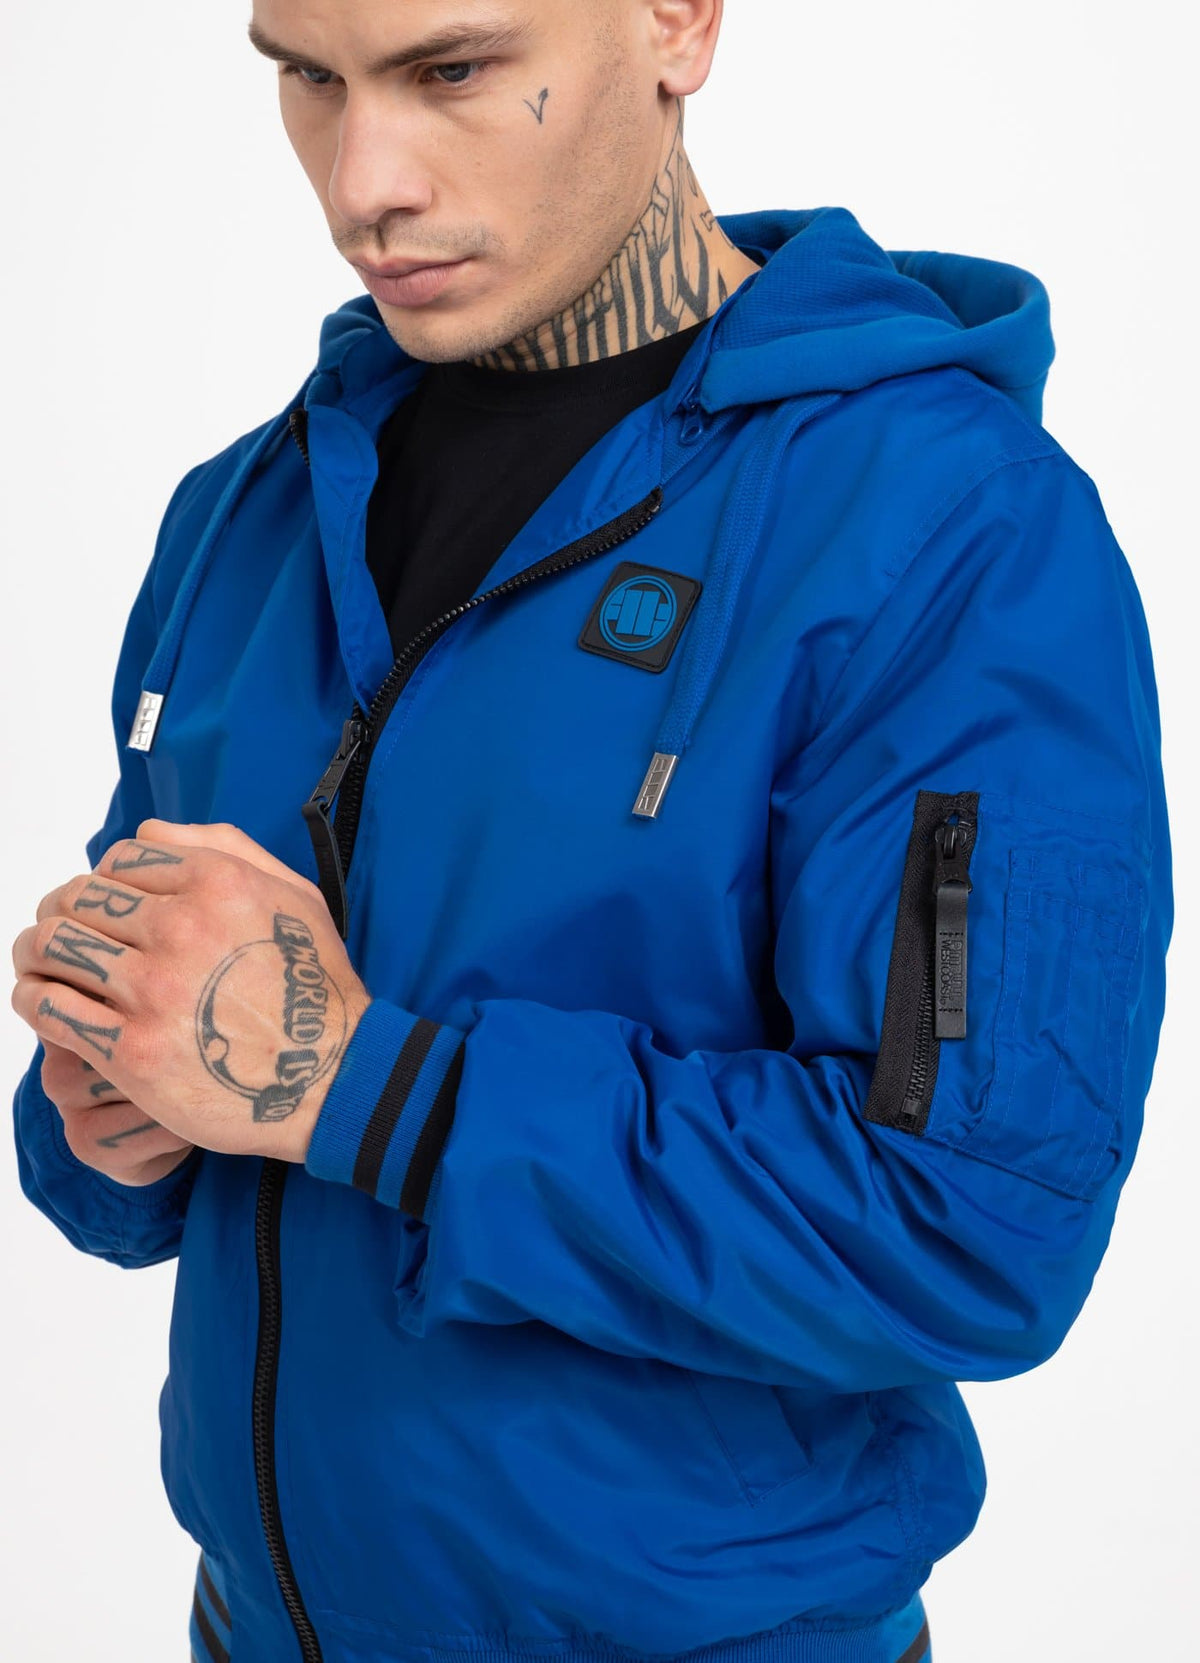 Jacket NIMITZ Royal Blue - Pitbull West Coast International Store 